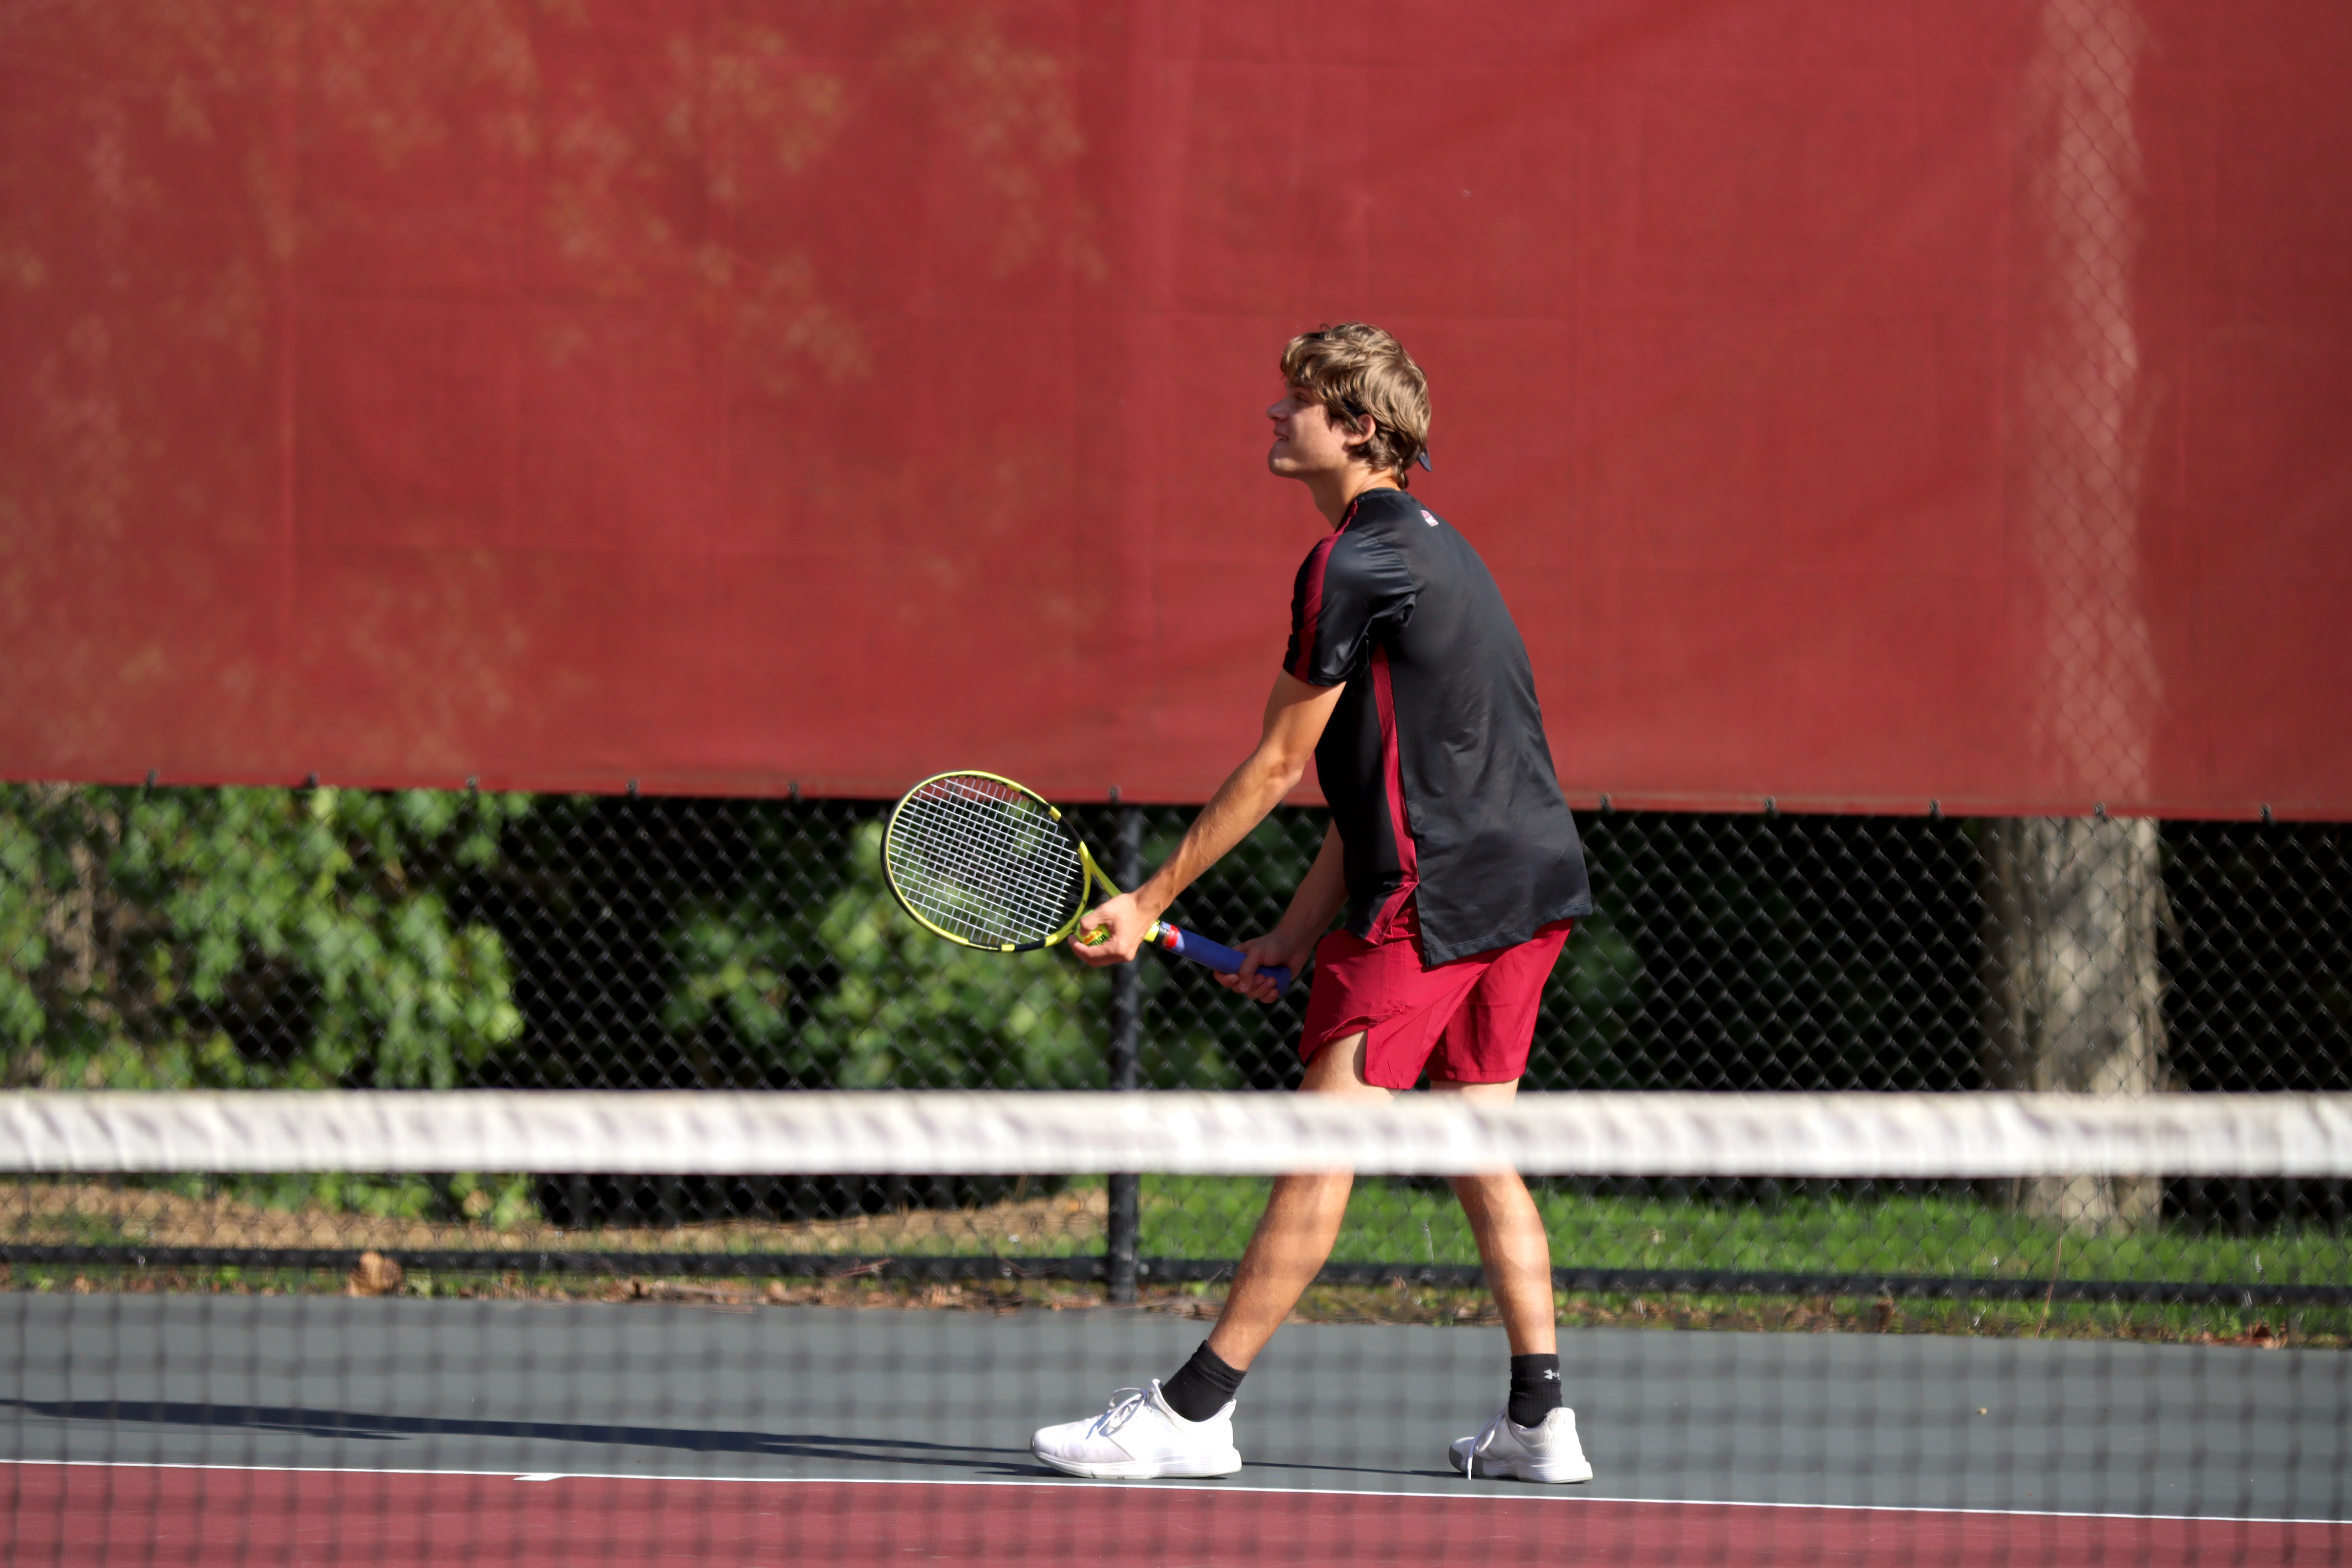 Matthew N. teaches tennis lessons in Bethlehem, PA